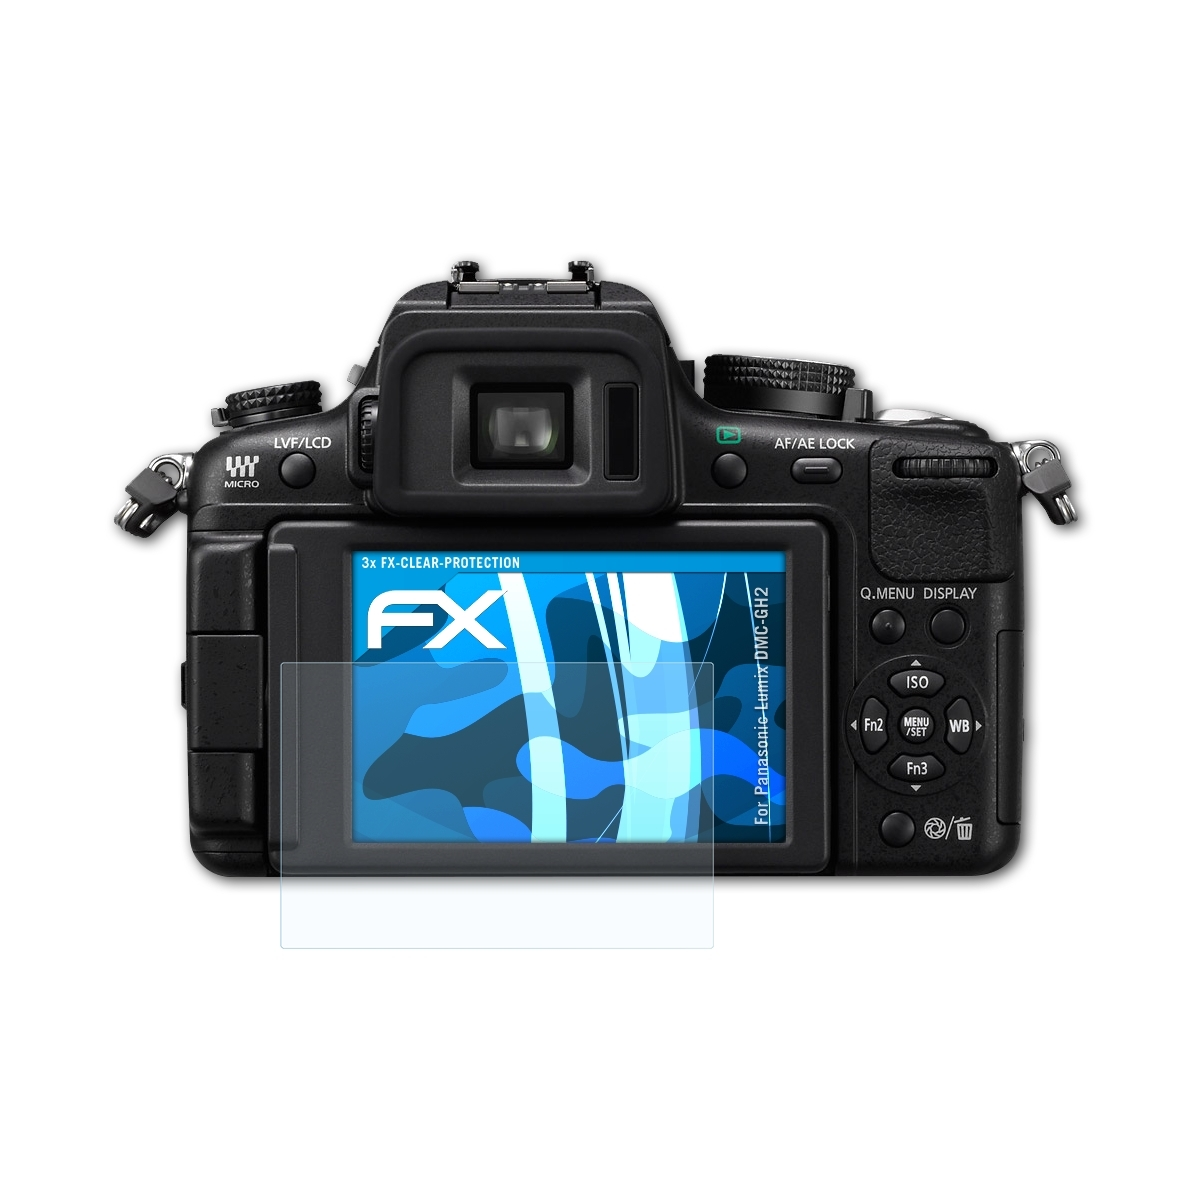 ATFOLIX 3x FX-Clear DMC-GH2) Panasonic Lumix Displayschutz(für